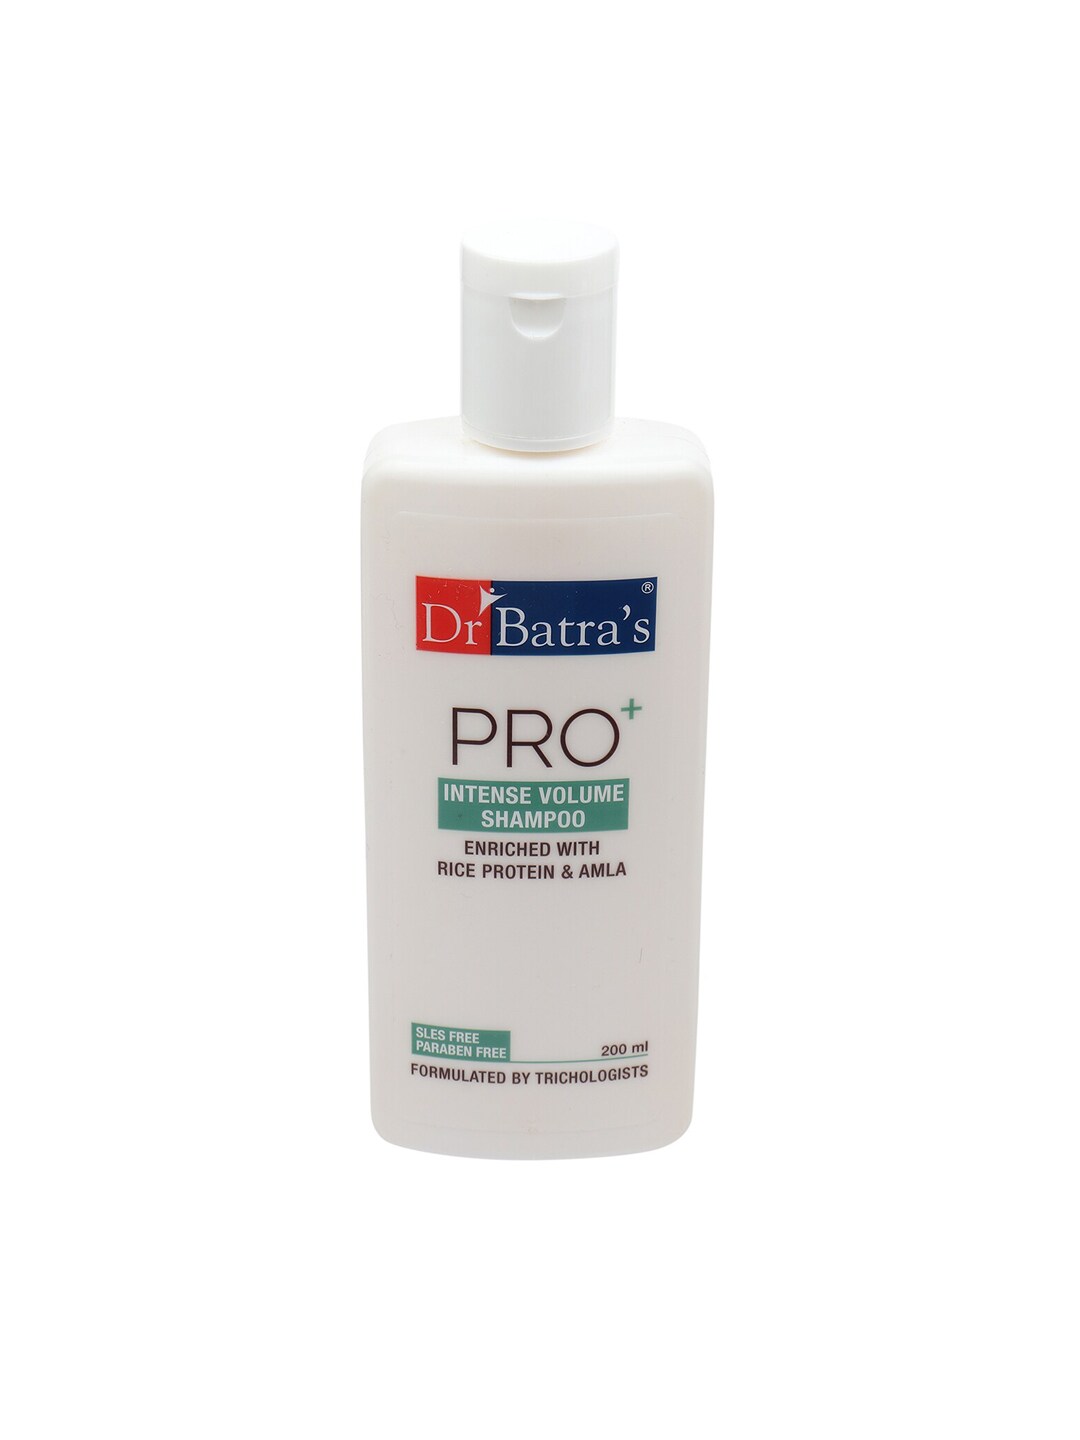 Dr. Batras Pro+ Intense Volume Shampoo with Rice Protein & Amla 200 ml Price in India